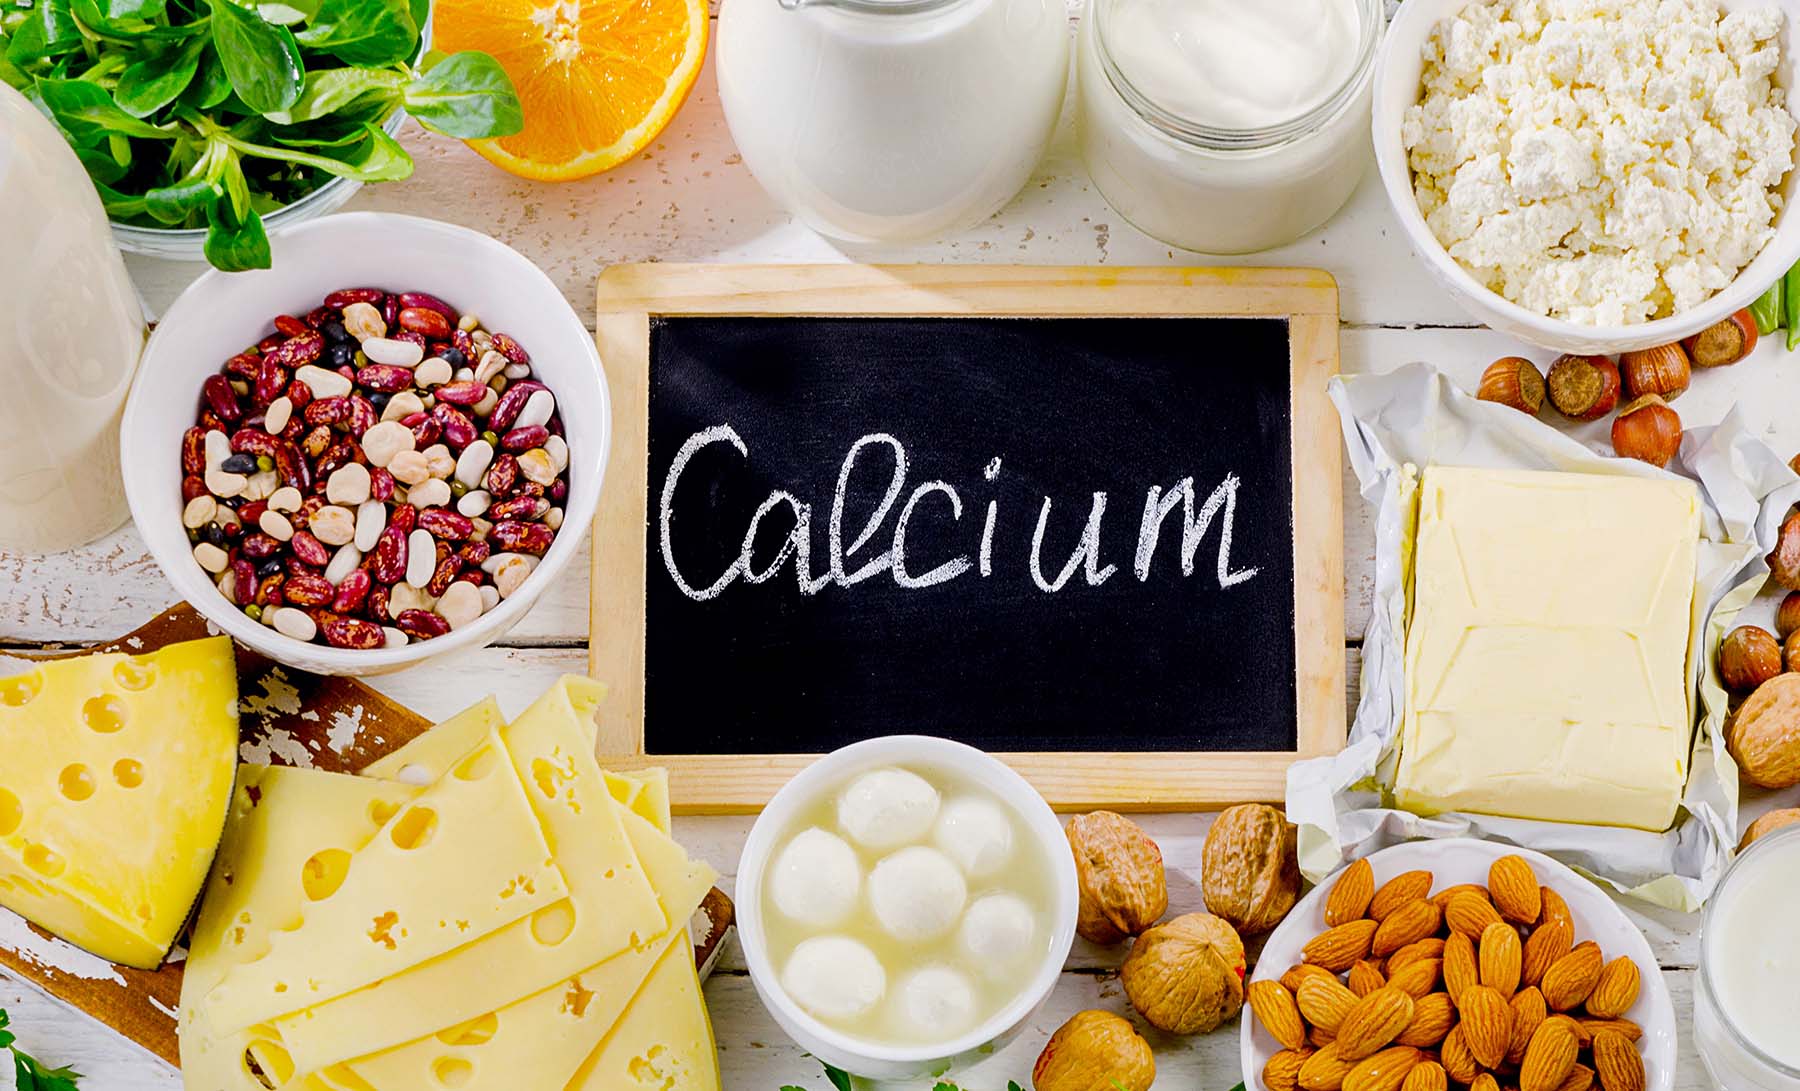 Calcium on blackboard with food